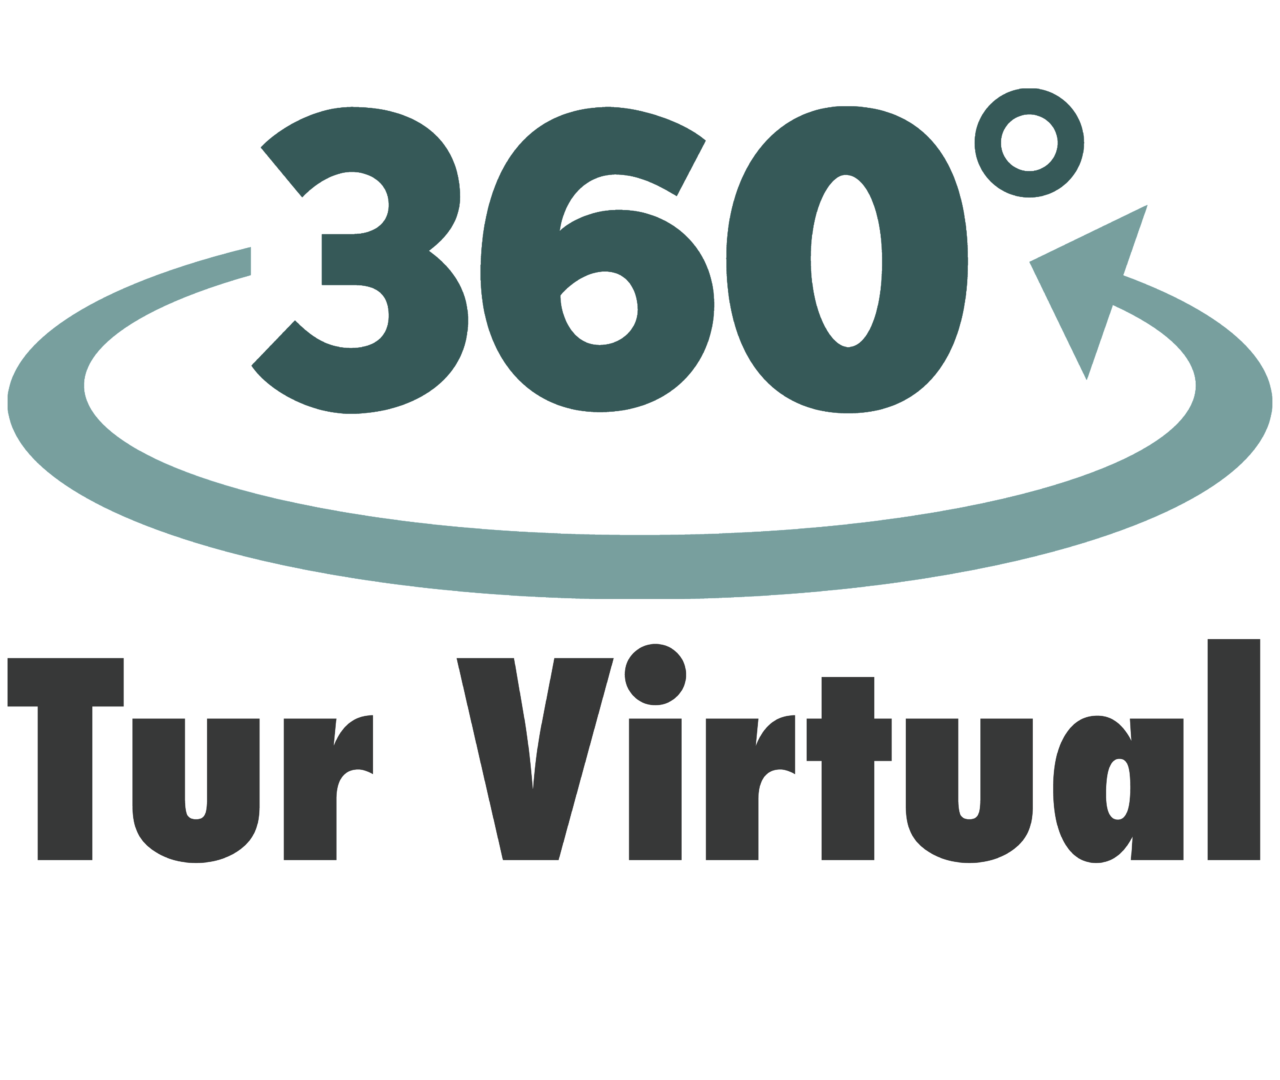 Tur 360 logo